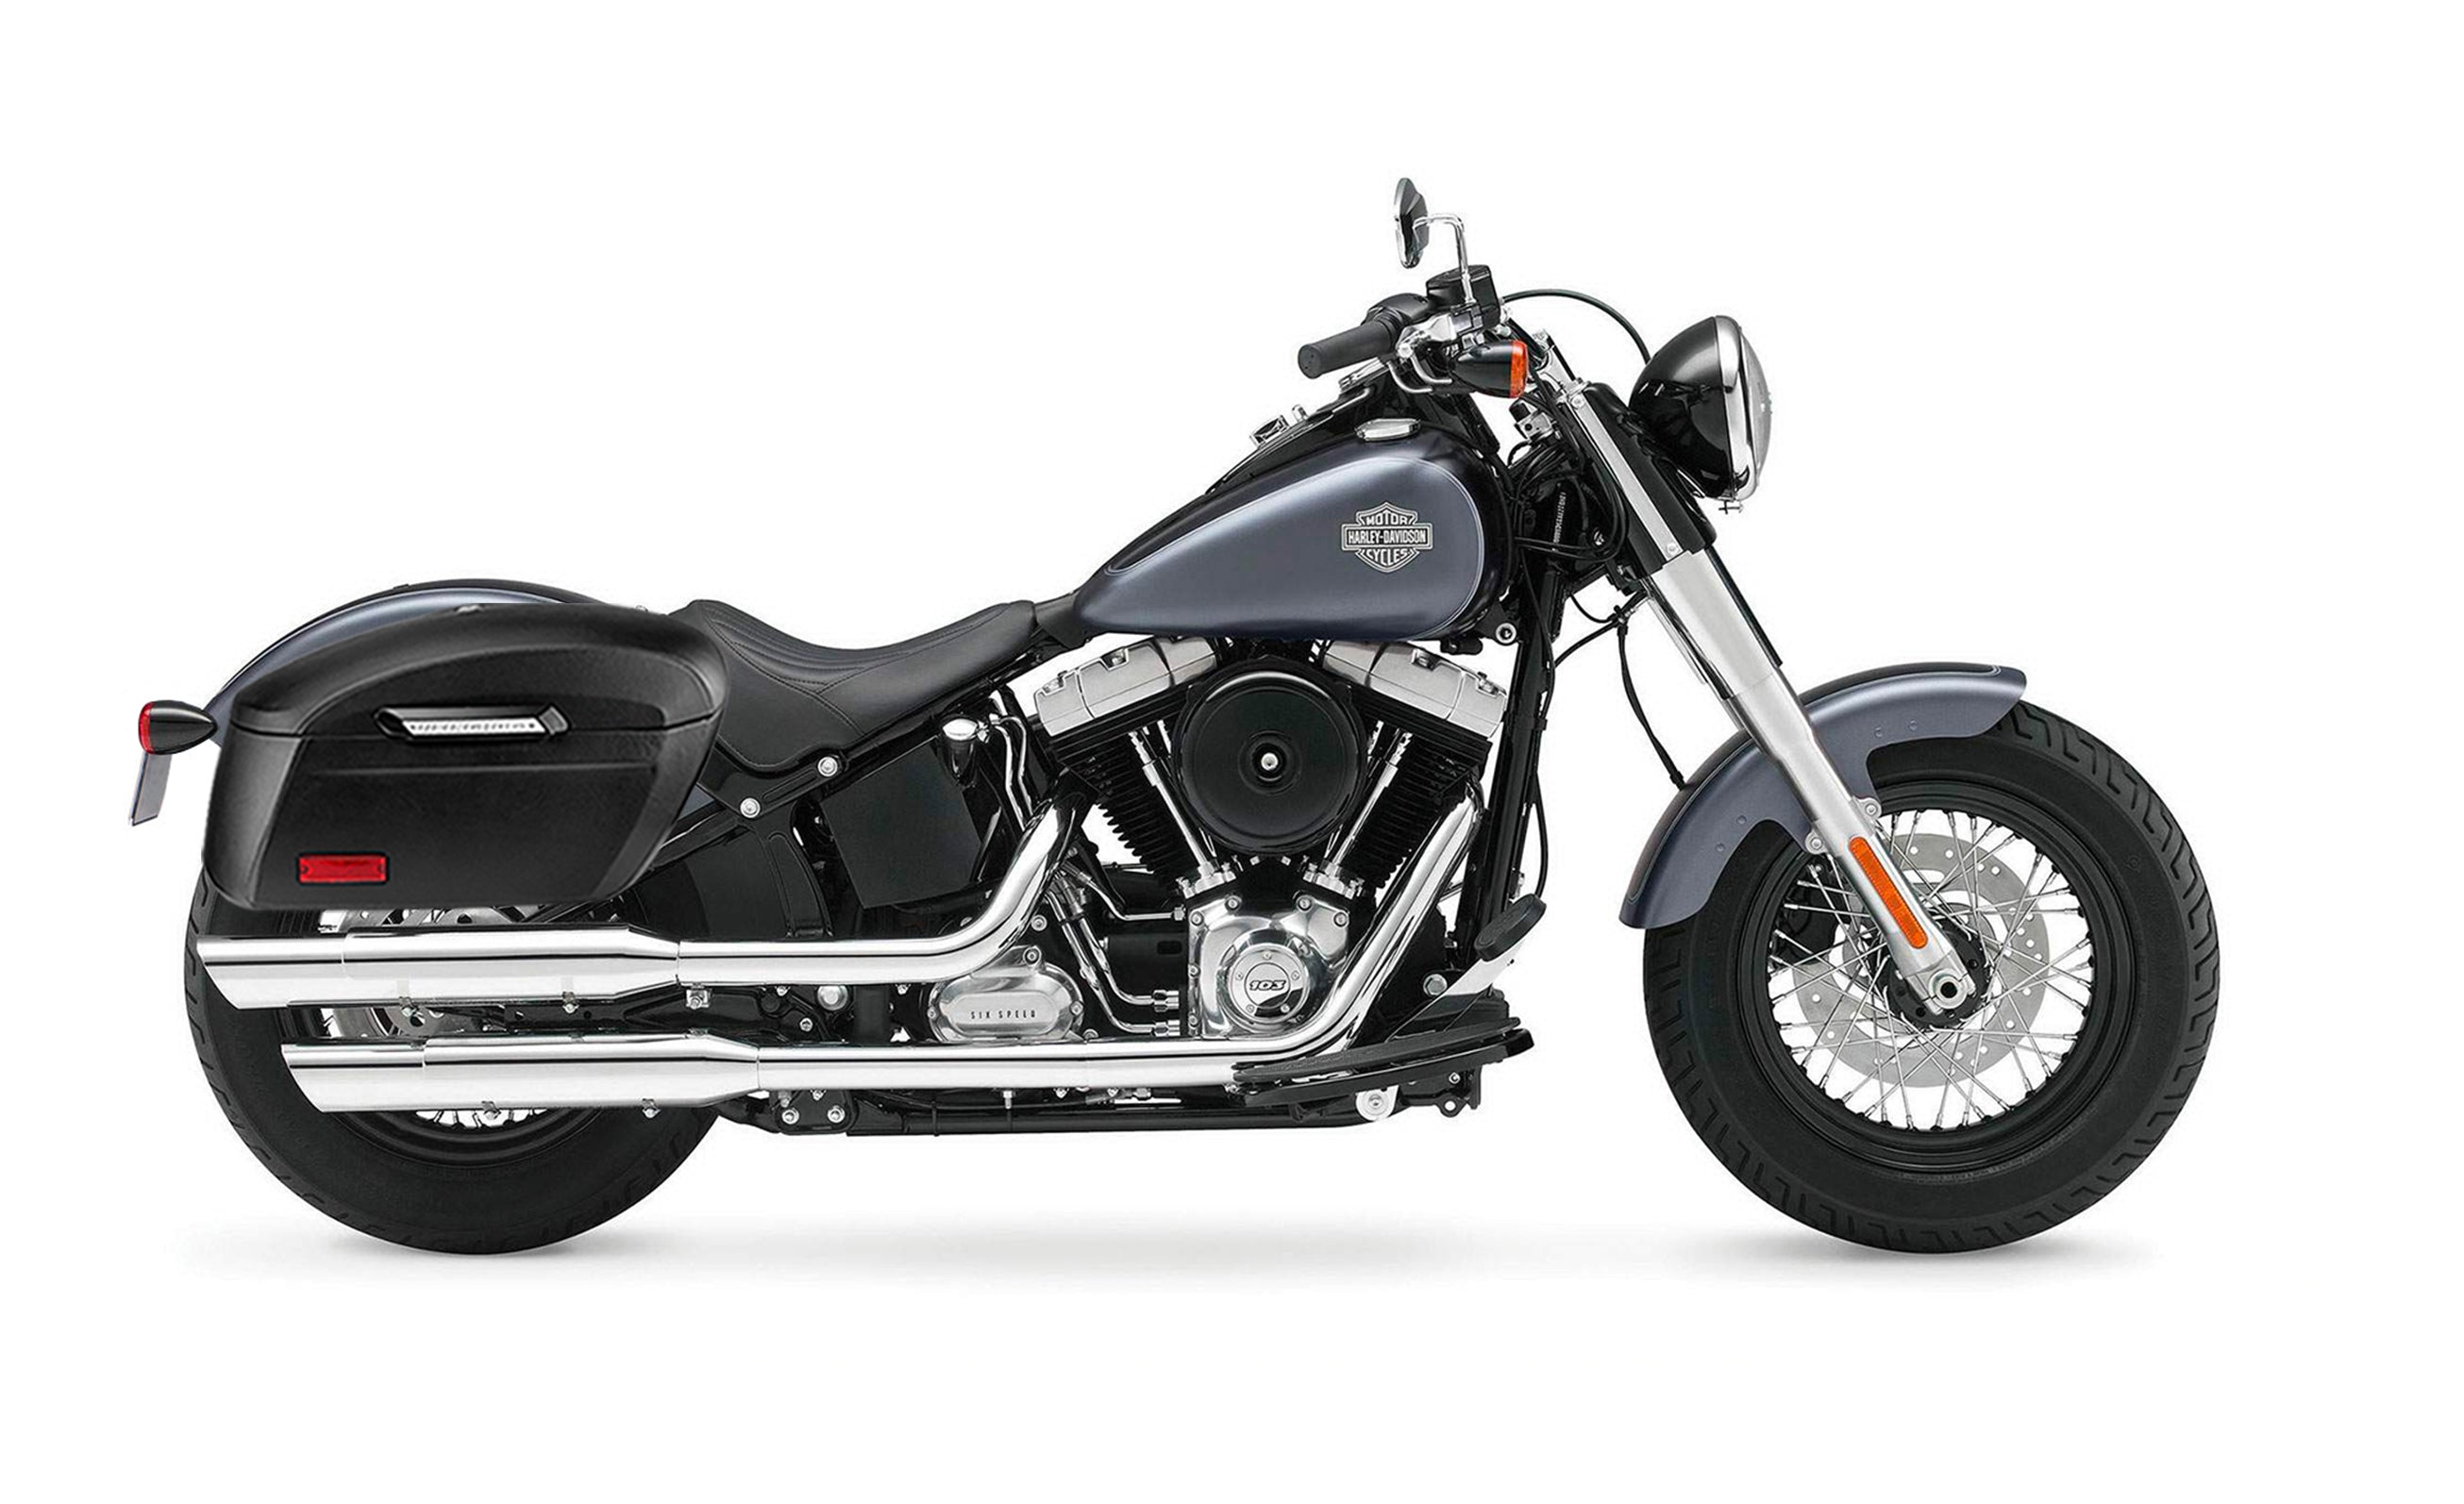 46L - Lamellar Vale XL Matte Motorcycle Hard Saddlebags for Harley Softail Slim FLS on Bike Photo @expand